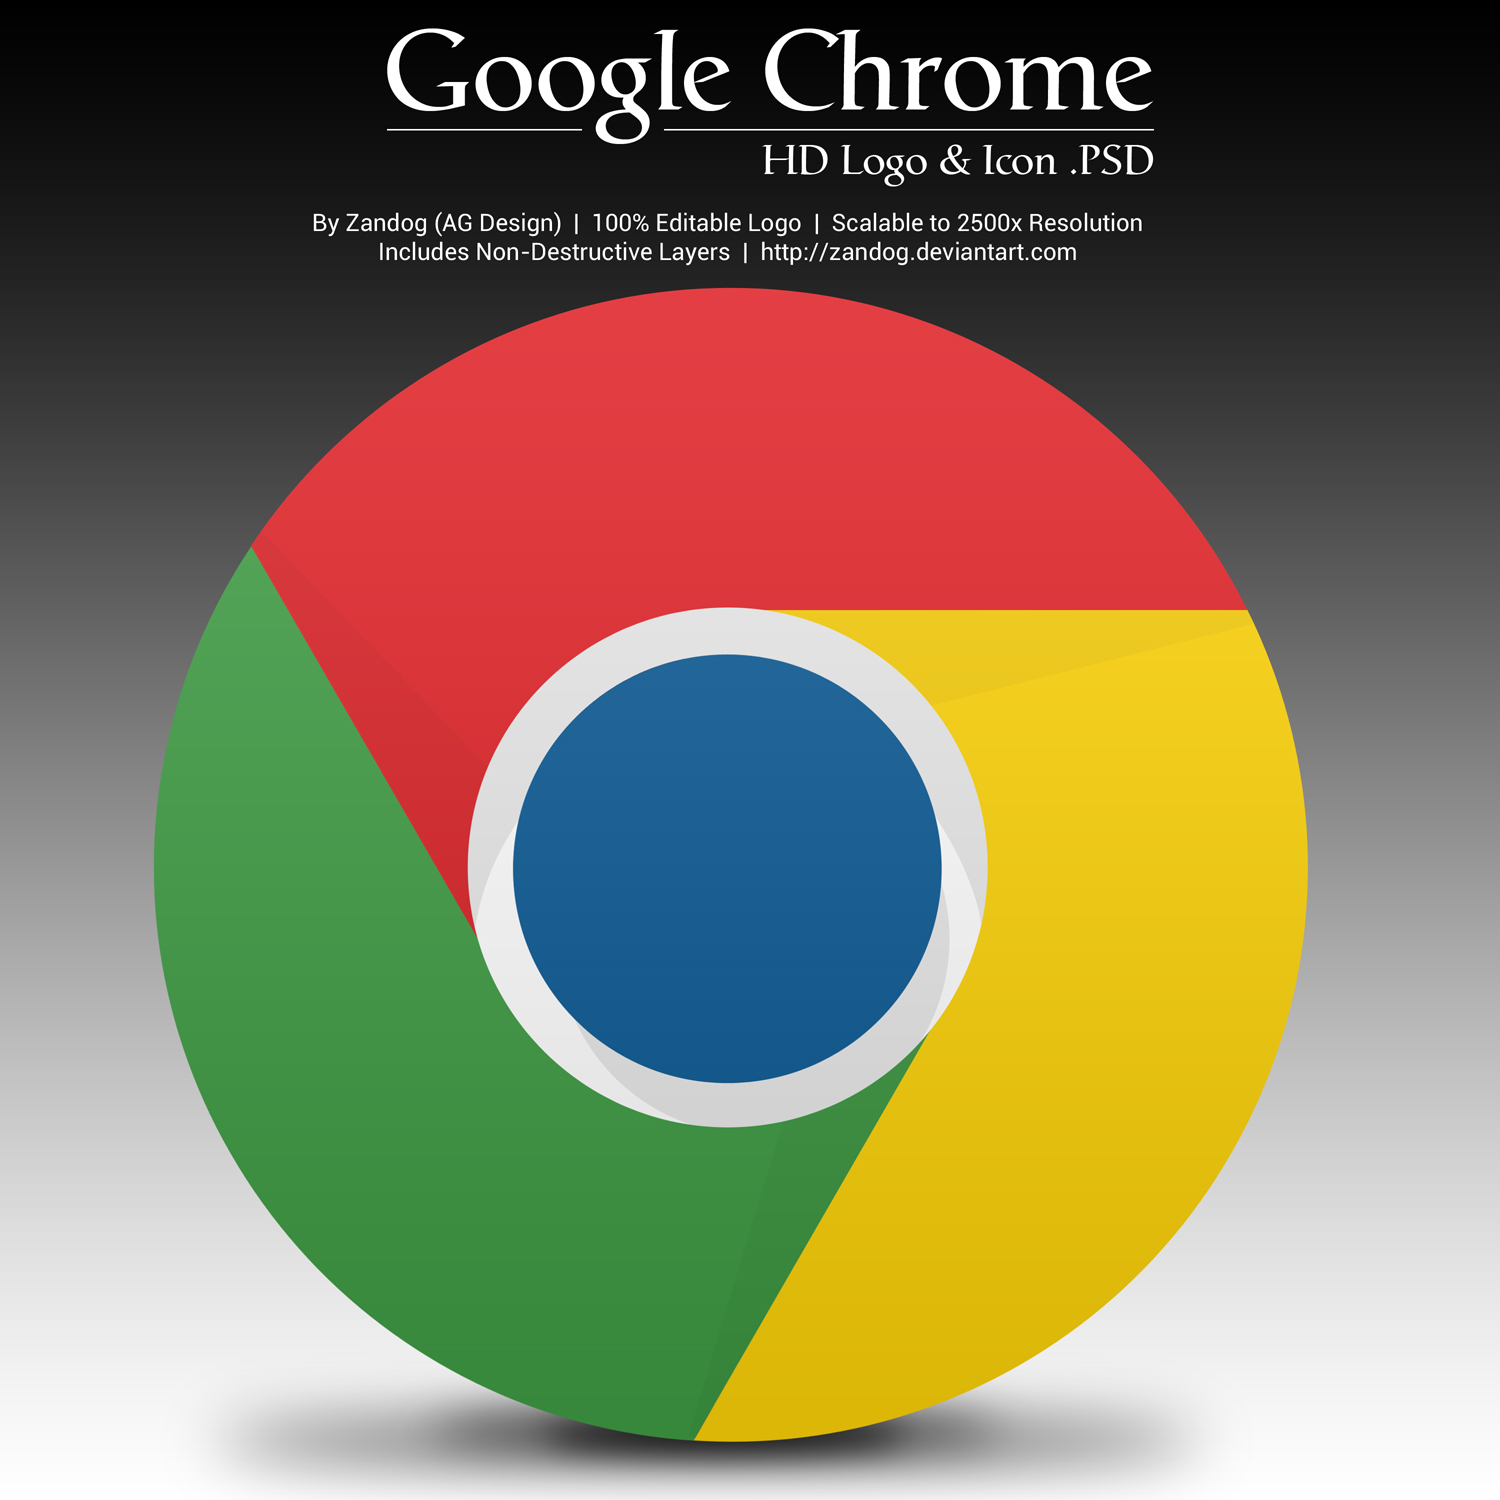 Google Chrome HD Logo and Icon .PSD by zandog on DeviantArt